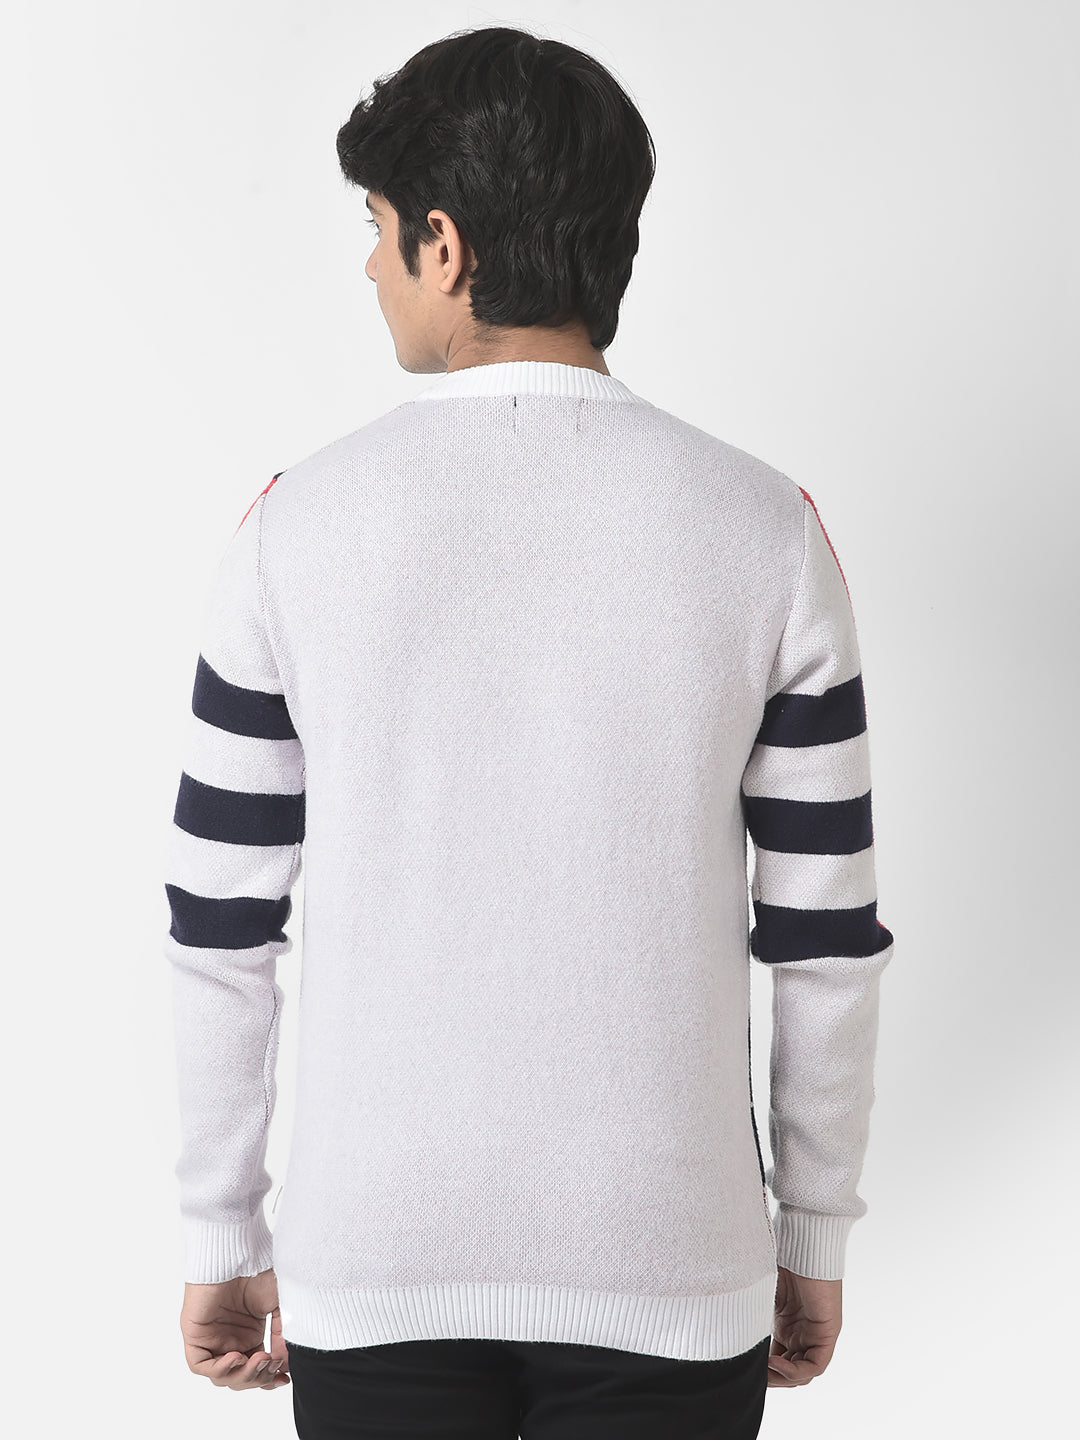  Off-White Graphic Striped Sweater